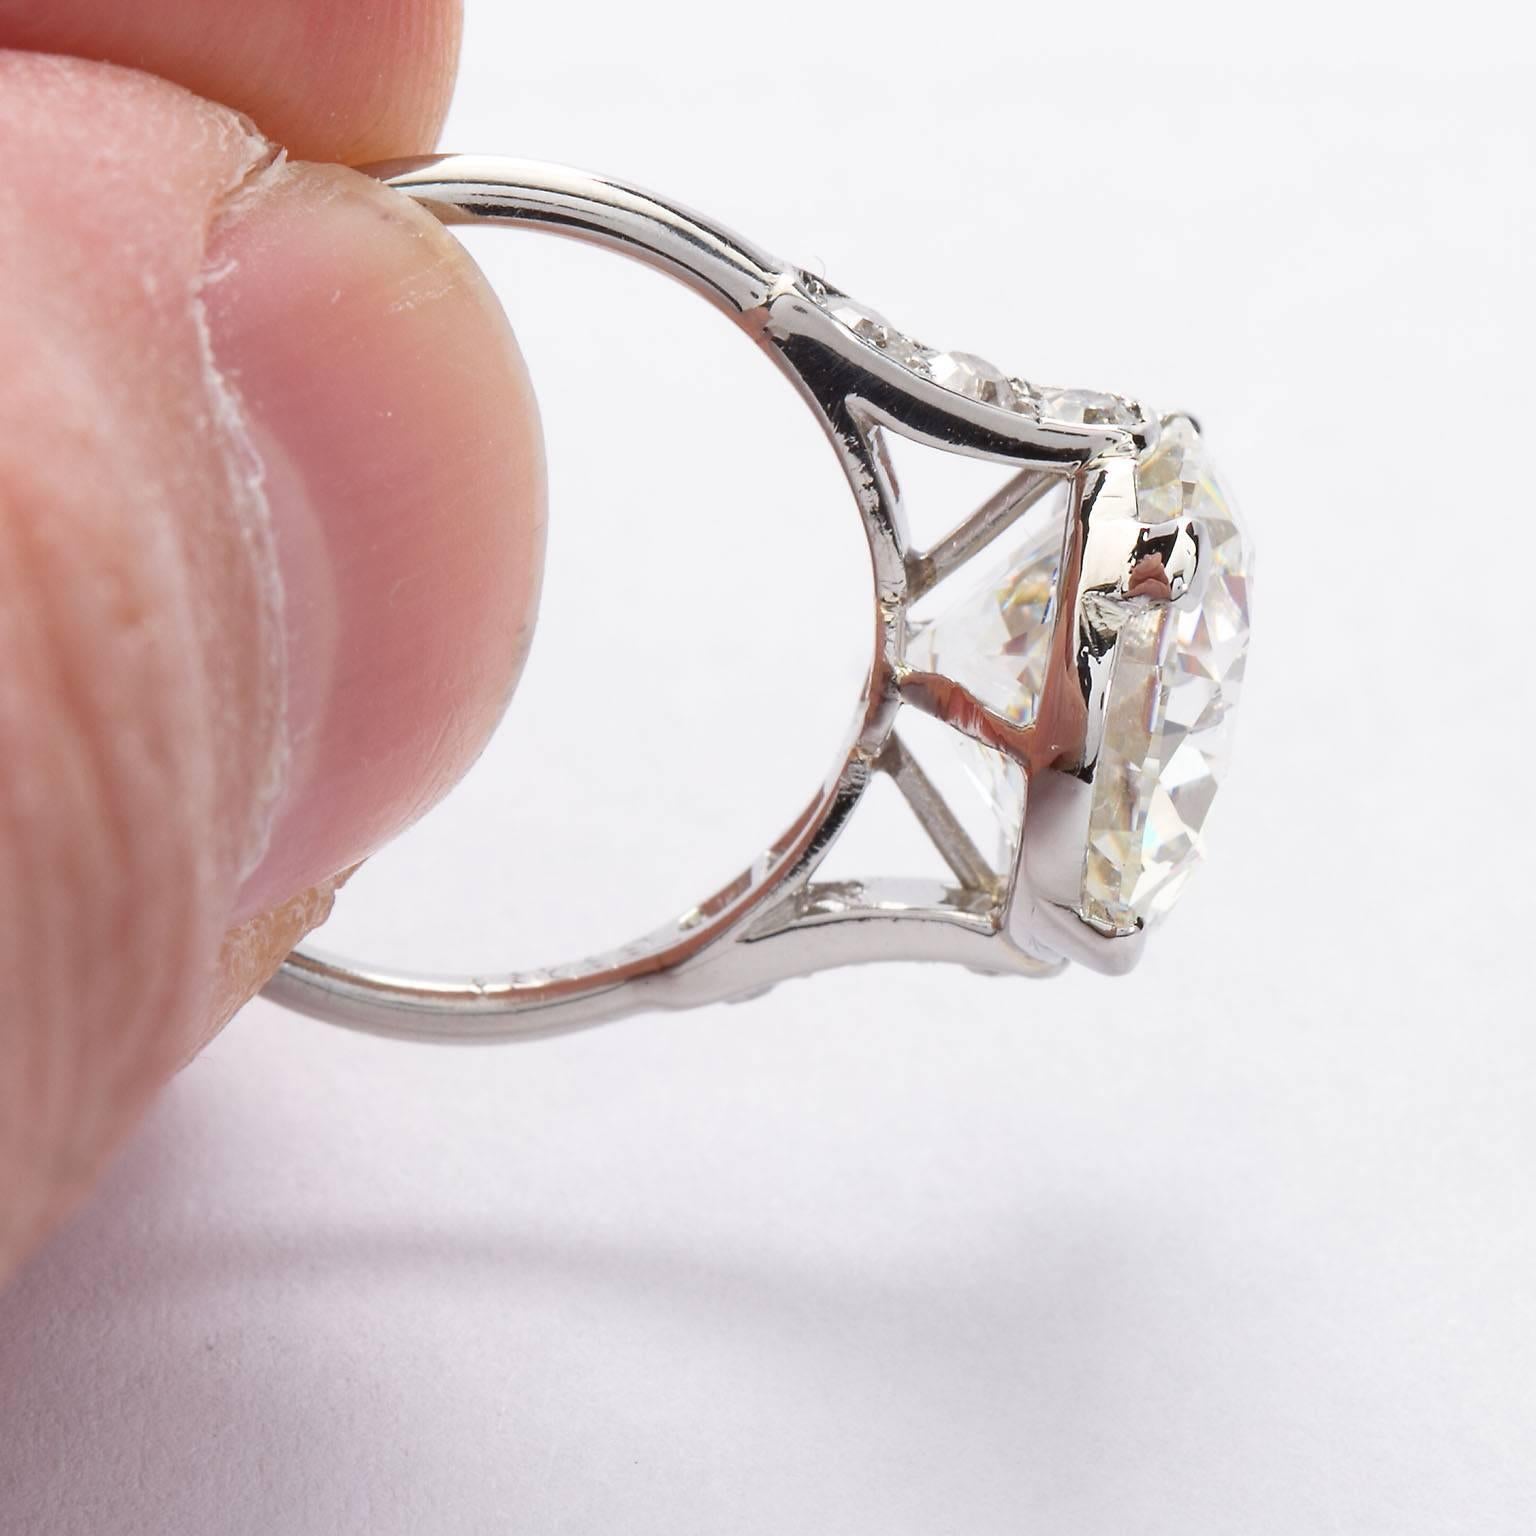 Cartier Paris Round Brilliant Diamond Engagement Ring 4.41 Carat White Gold GIA 2